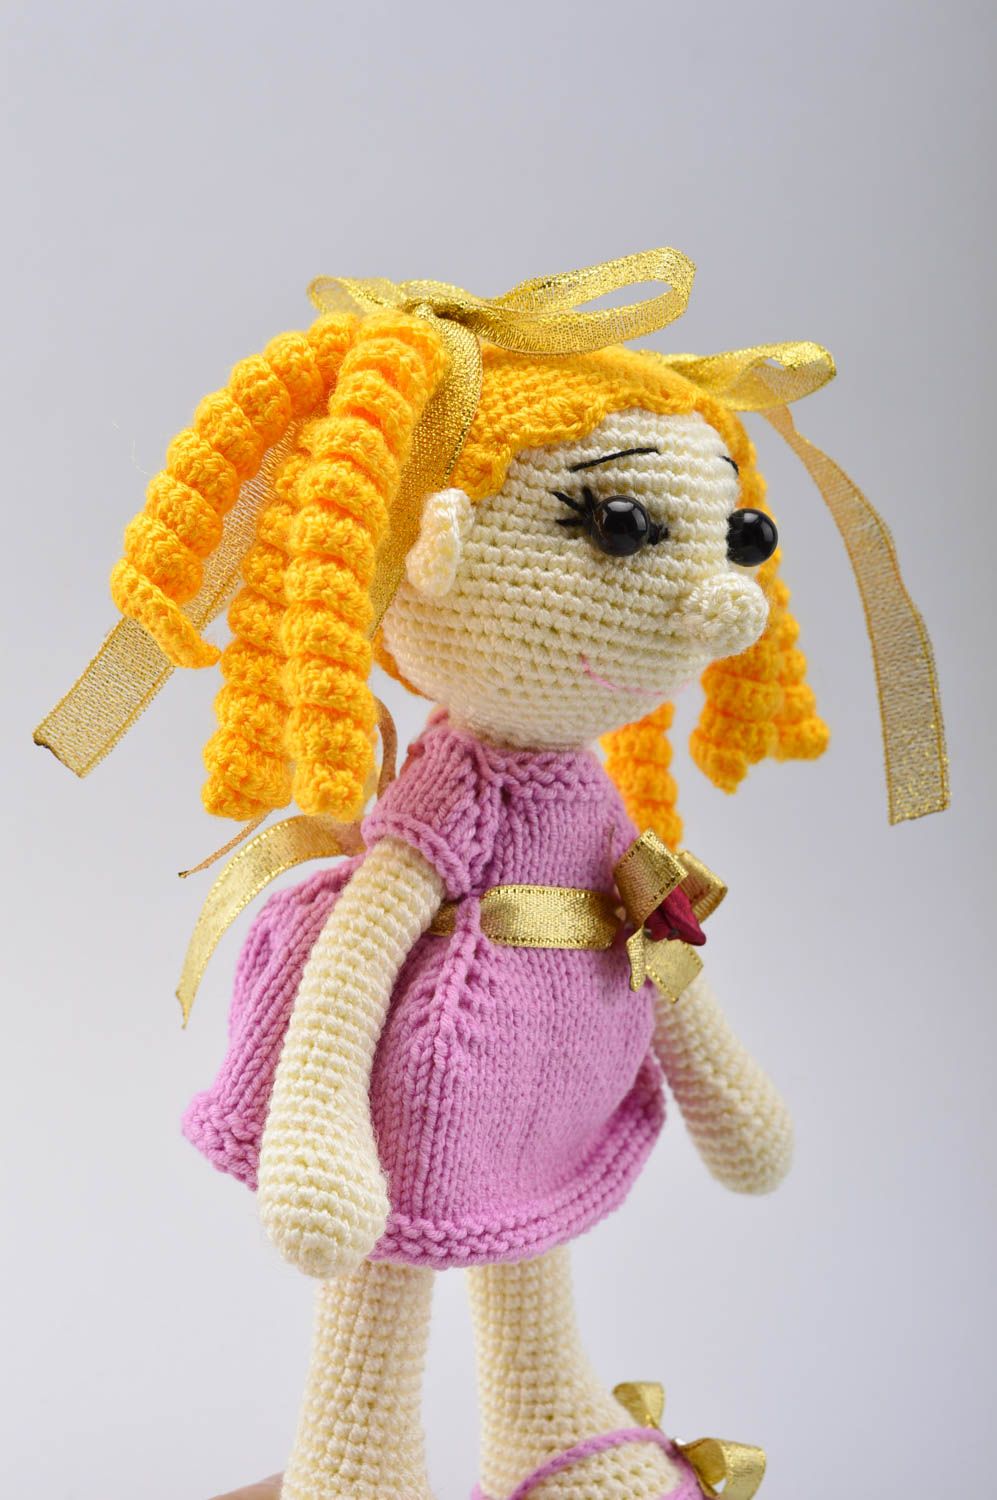 Handmade crochet doll designer doll unusual gift for baby nursery decor photo 4